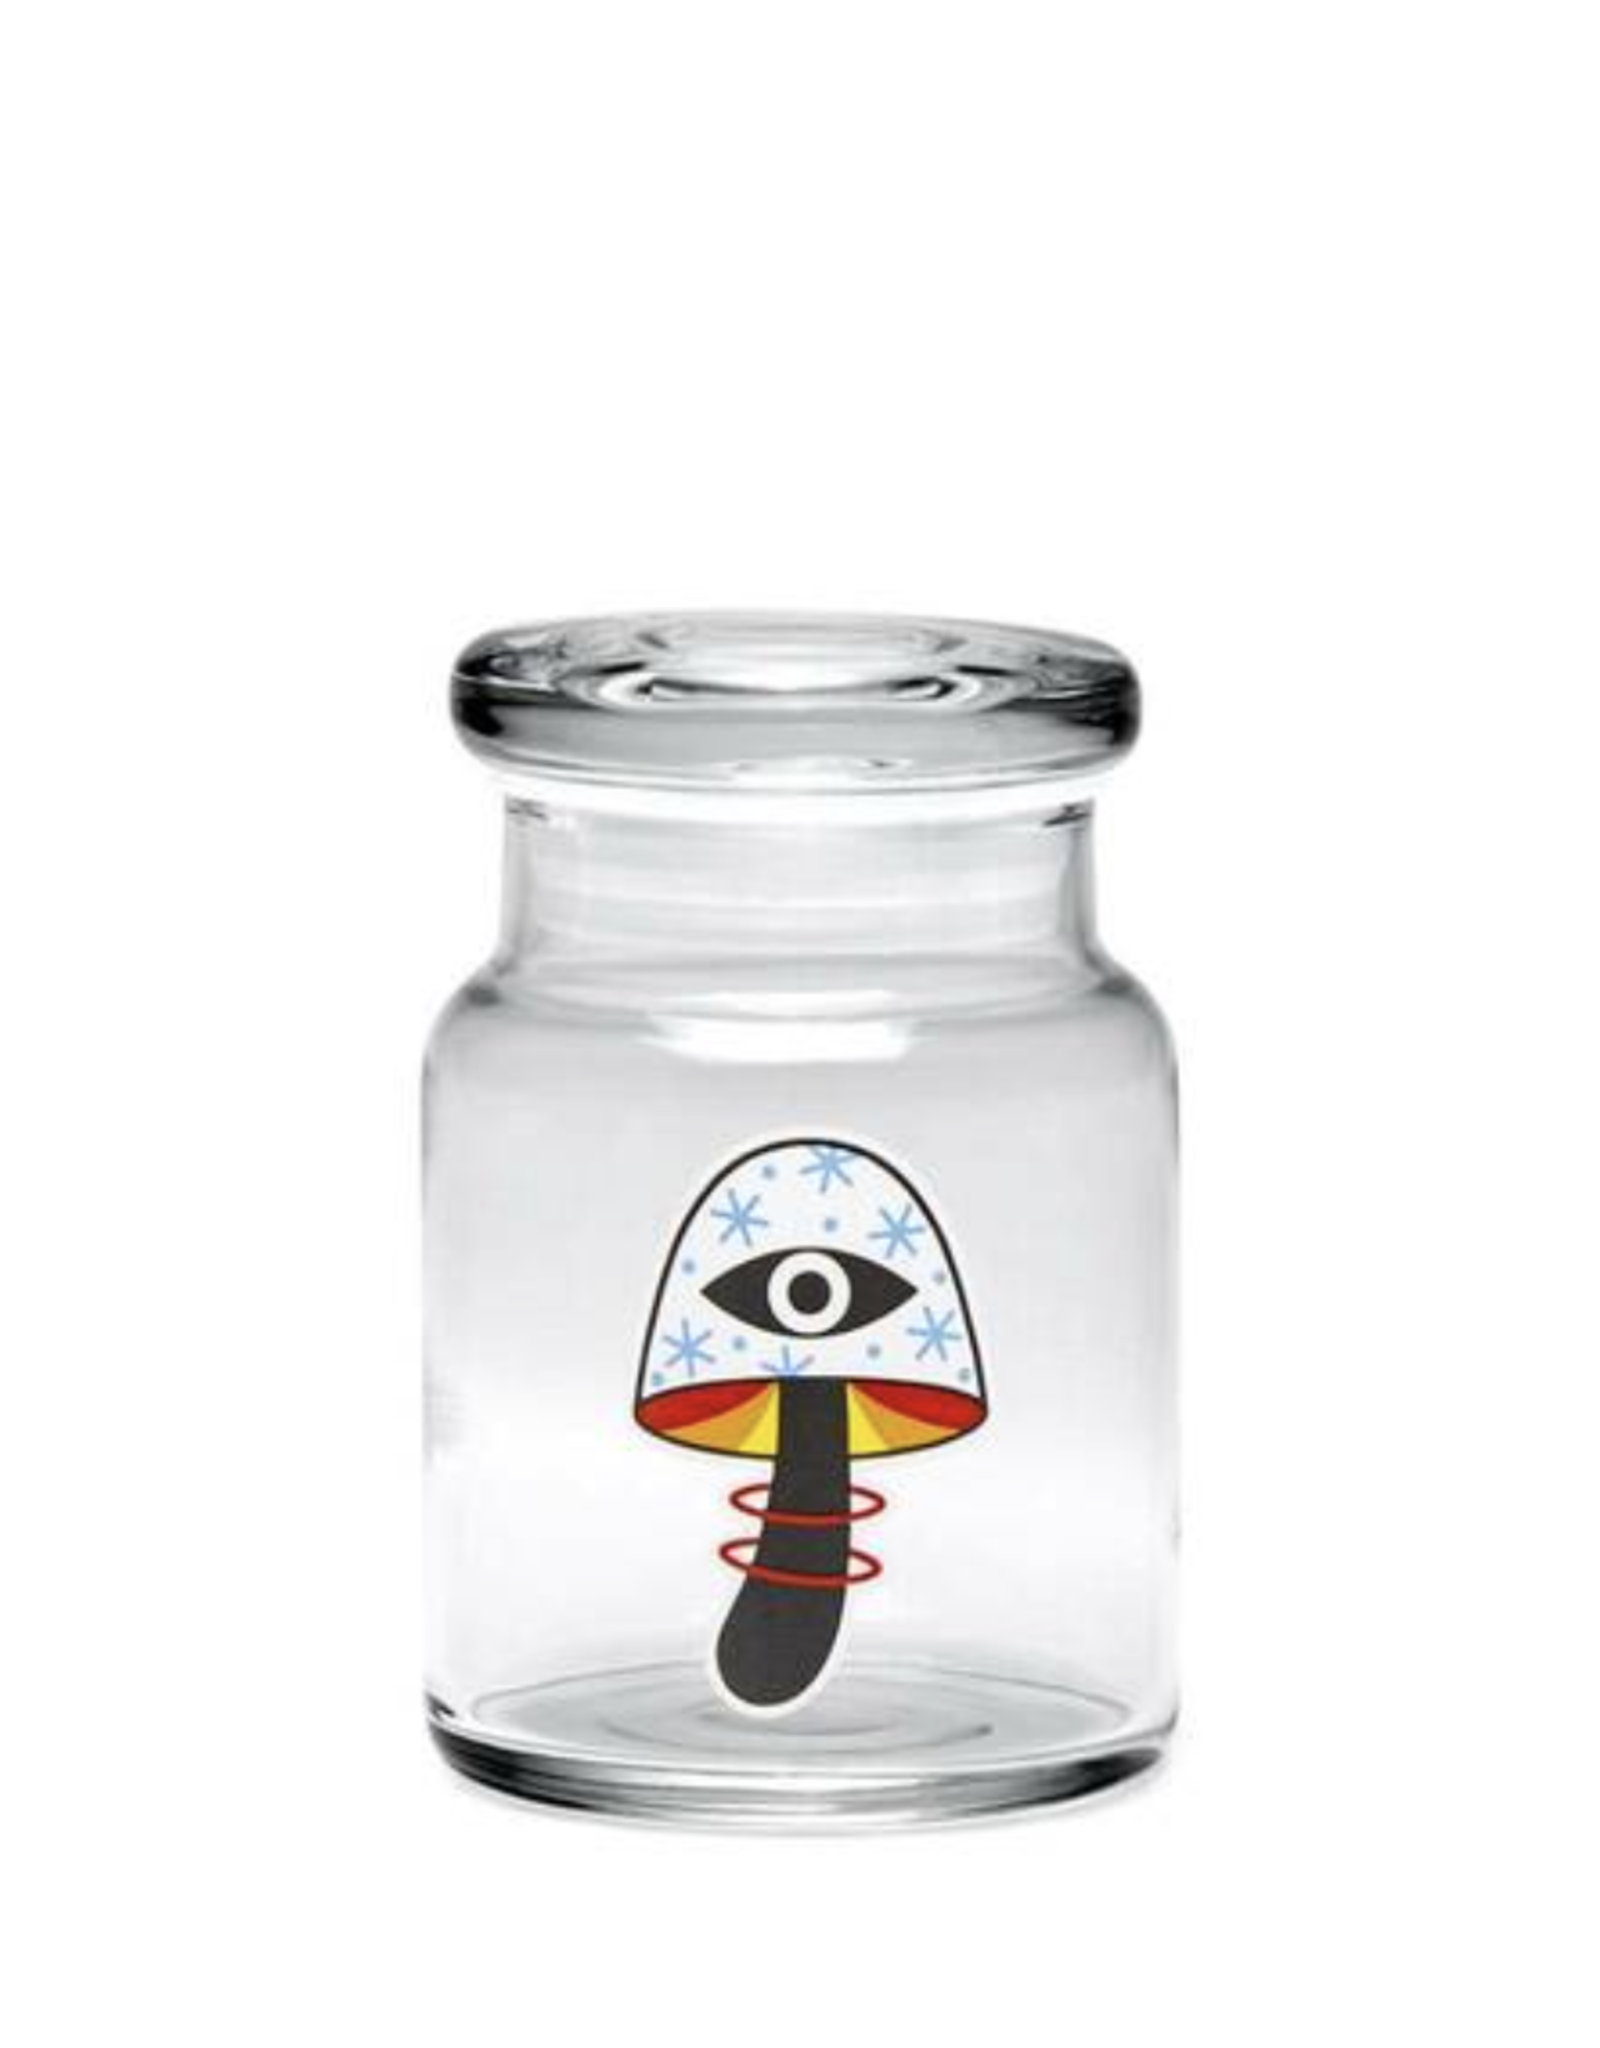 420 Science Small Pop Top Jar - Shroom Vision